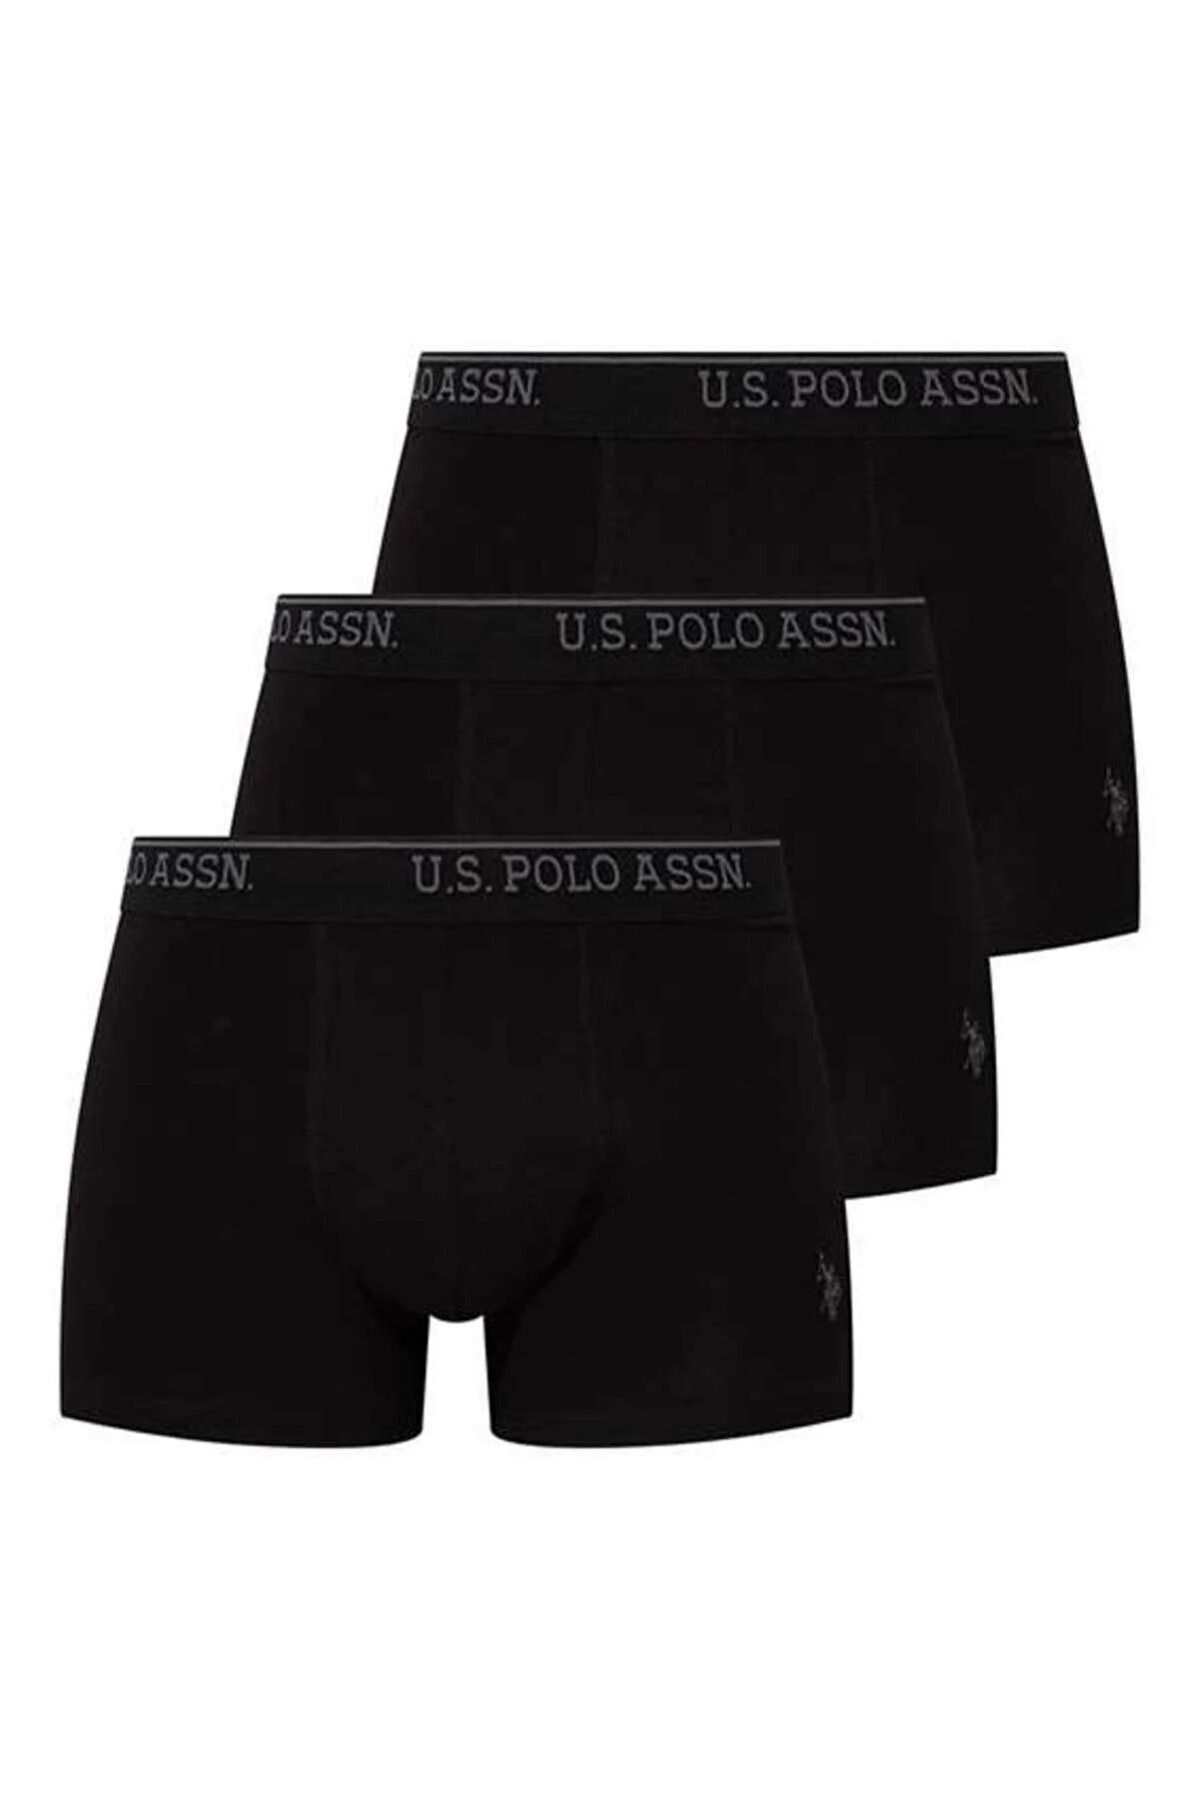 U.S. Polo Assn. U.S. Polo Assn. Erkek 3 Lü Boxer Z.8ETA.0.GR0.9O.7UP.XKM.07042024